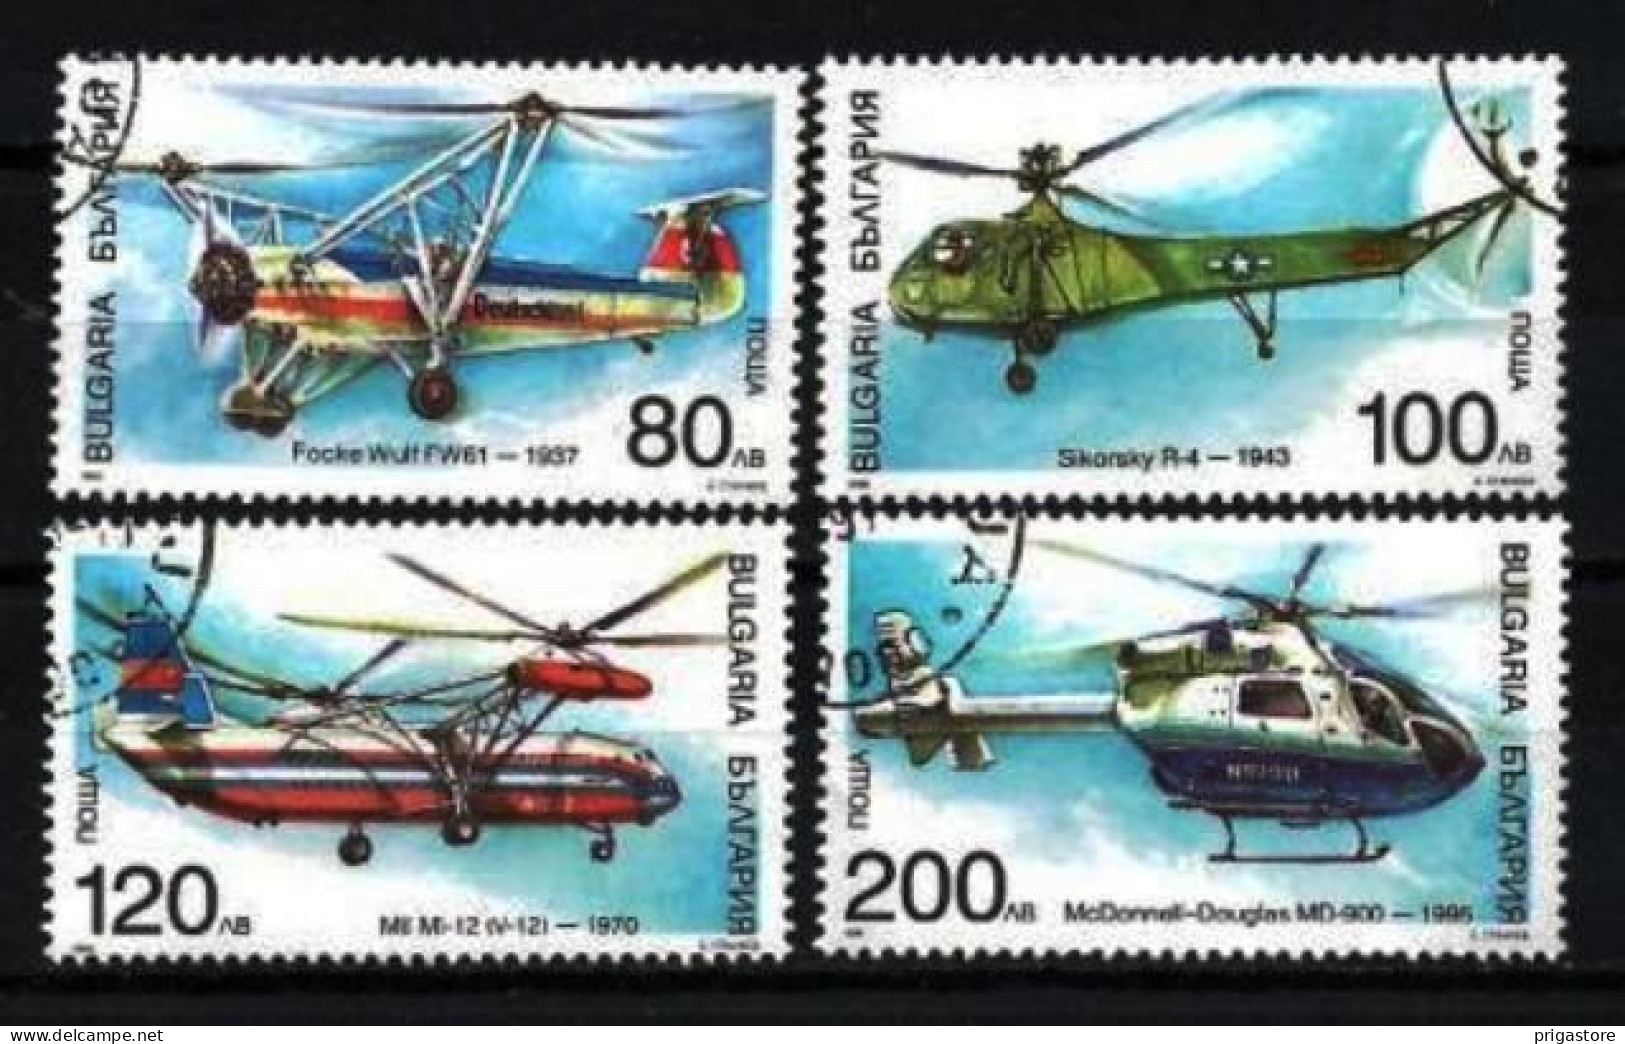 Bulgarie 1998 Avions Hélicoptères (4) Yvert N° 3783 à 3786 Oblitéré Used - Used Stamps